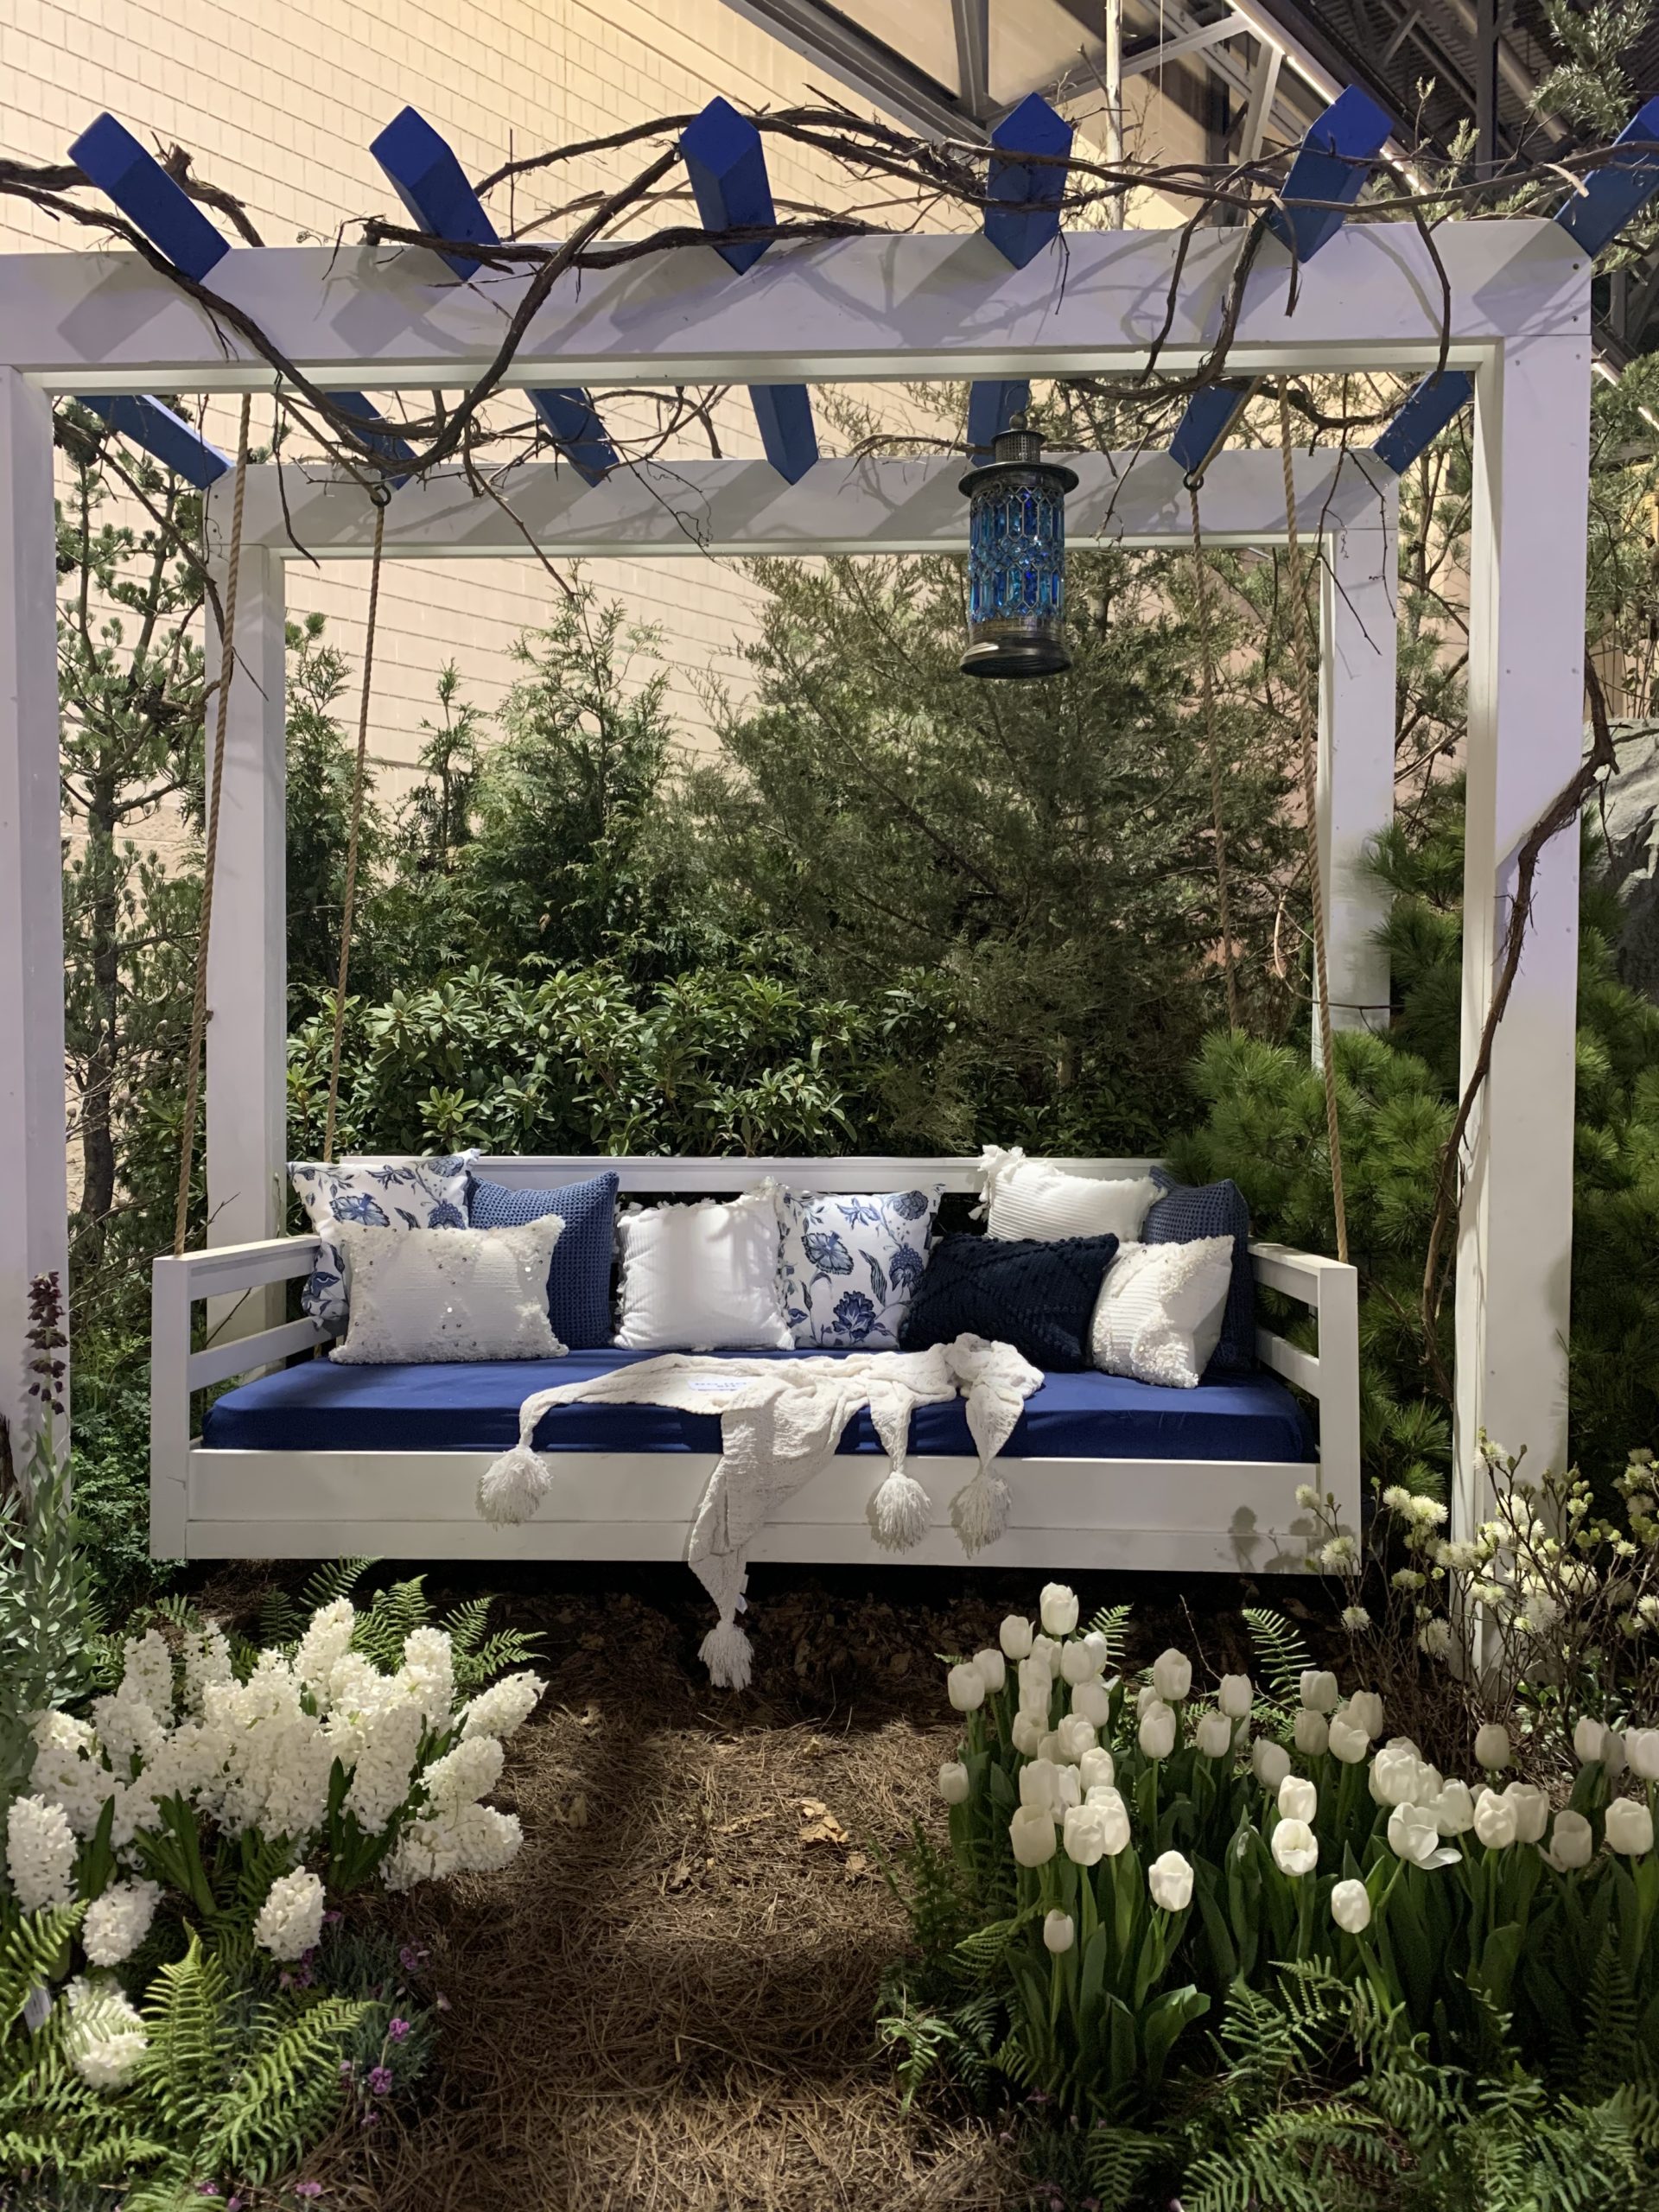 Mediterranean Inspired Backyard Sanctuary at the 2020 Philadelphia Flower Show